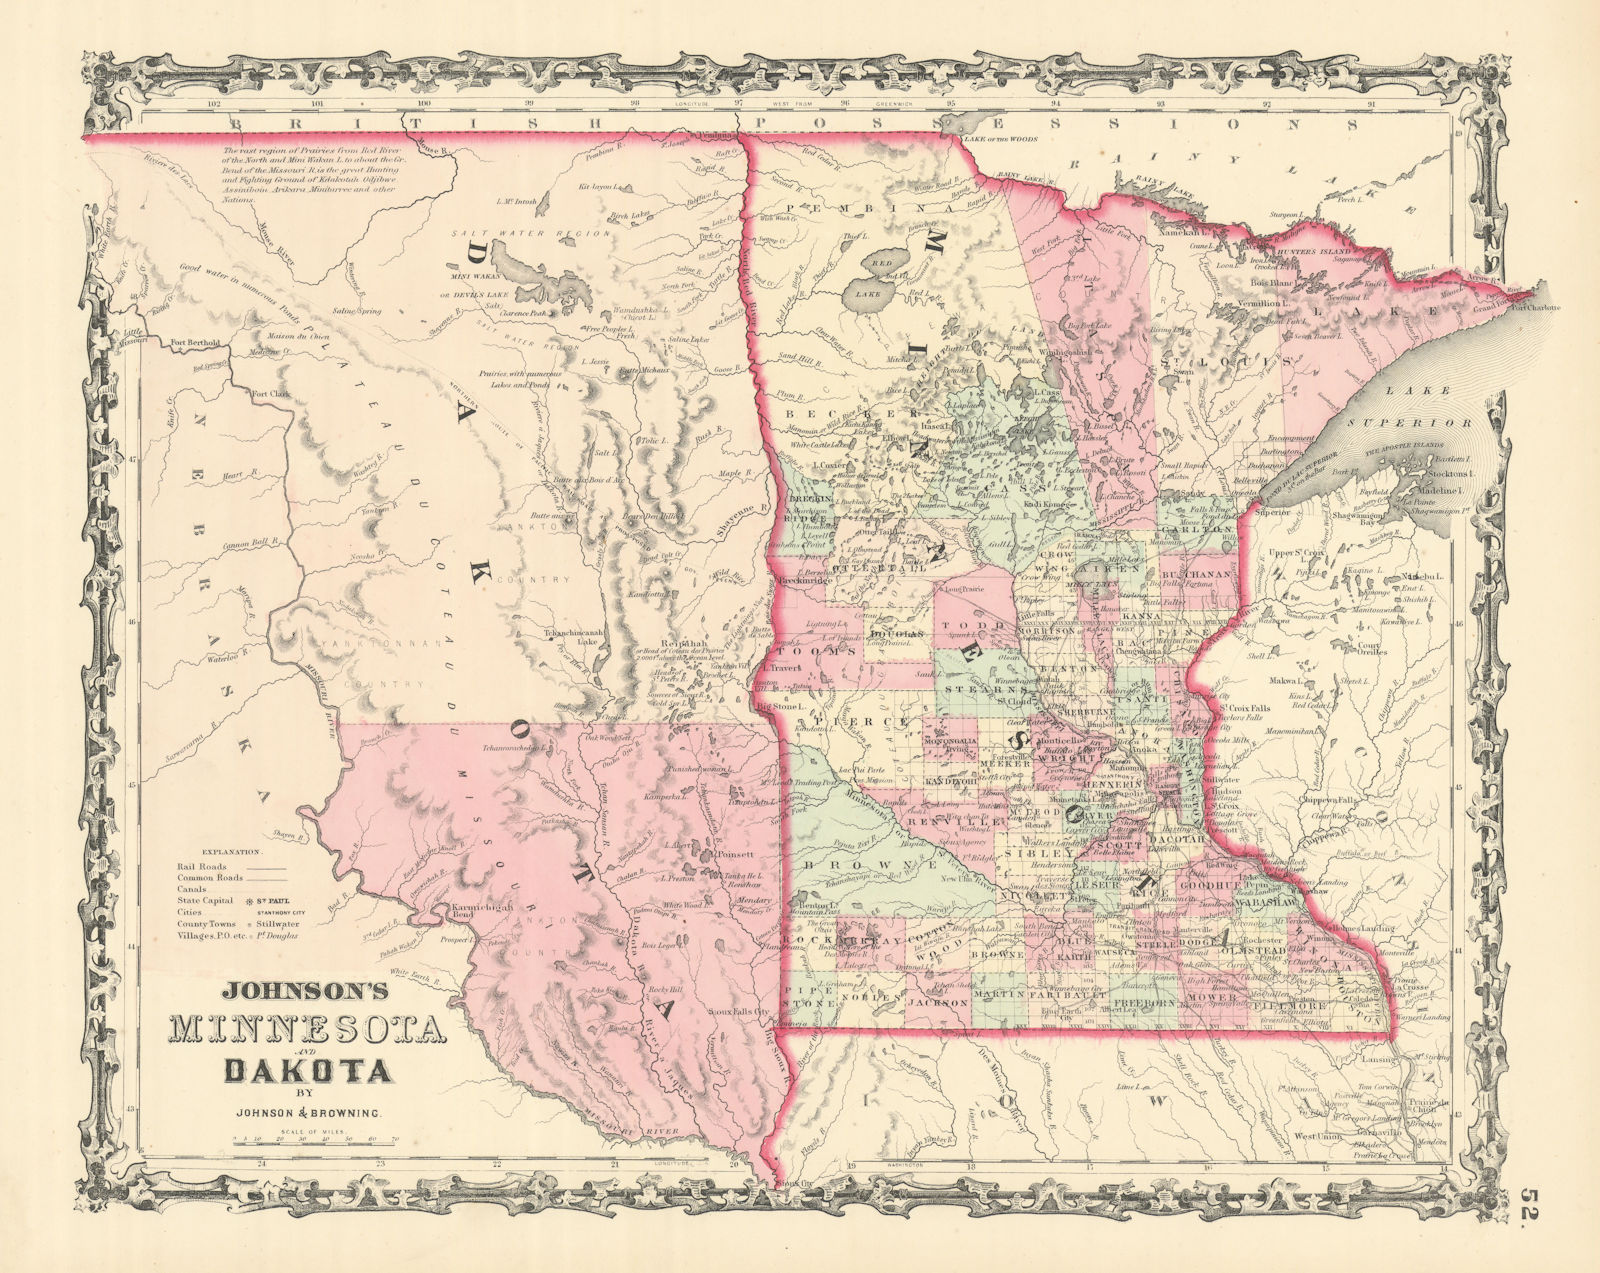 Johnson's Minnesota and Dakota [Territory]. US state map with counties 1861